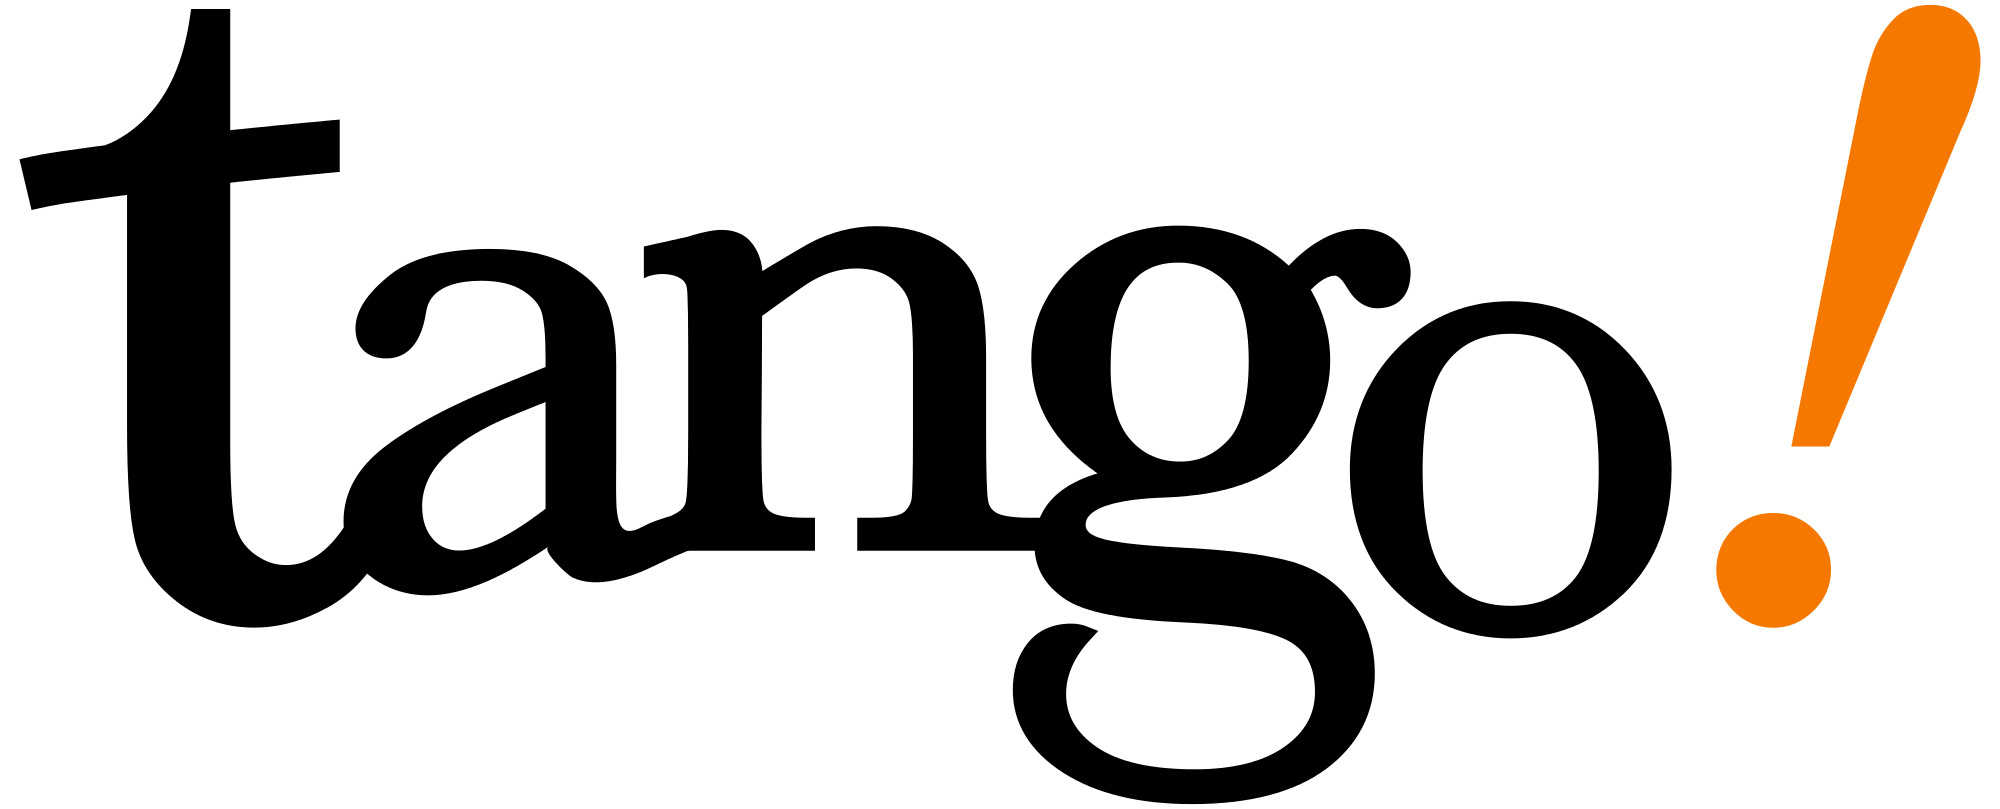 Tango Logo - File:Tango-logo-bw.svg - Wikimedia Commons